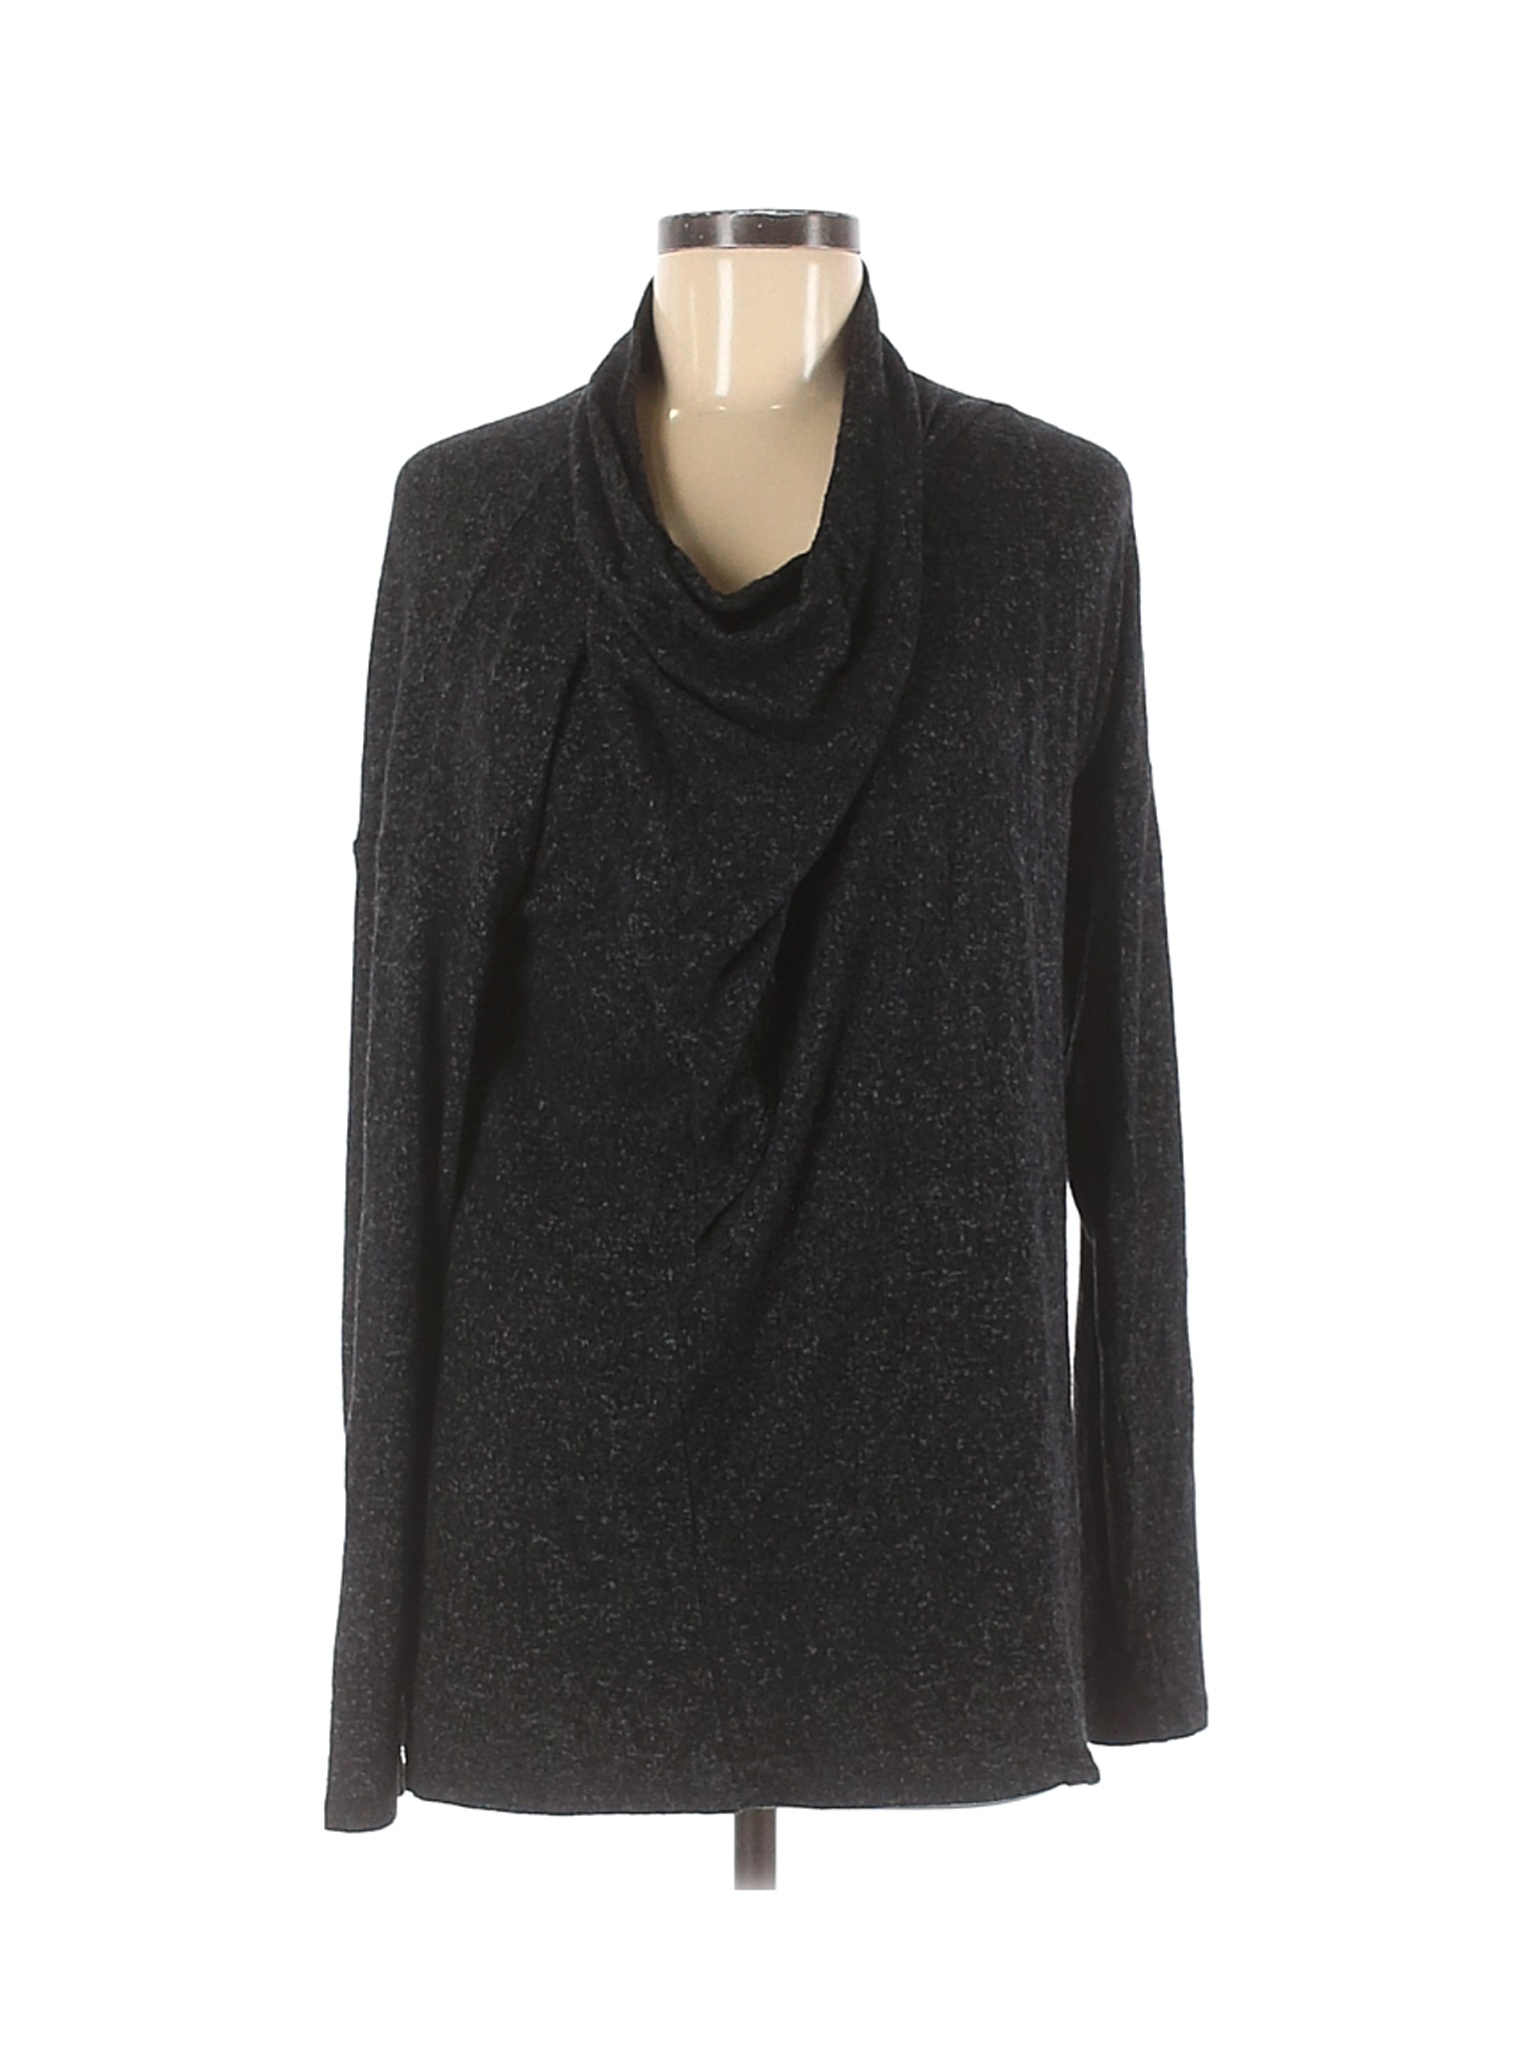 Simply Vera Vera Wang Women Black Pullover Sweater M | eBay